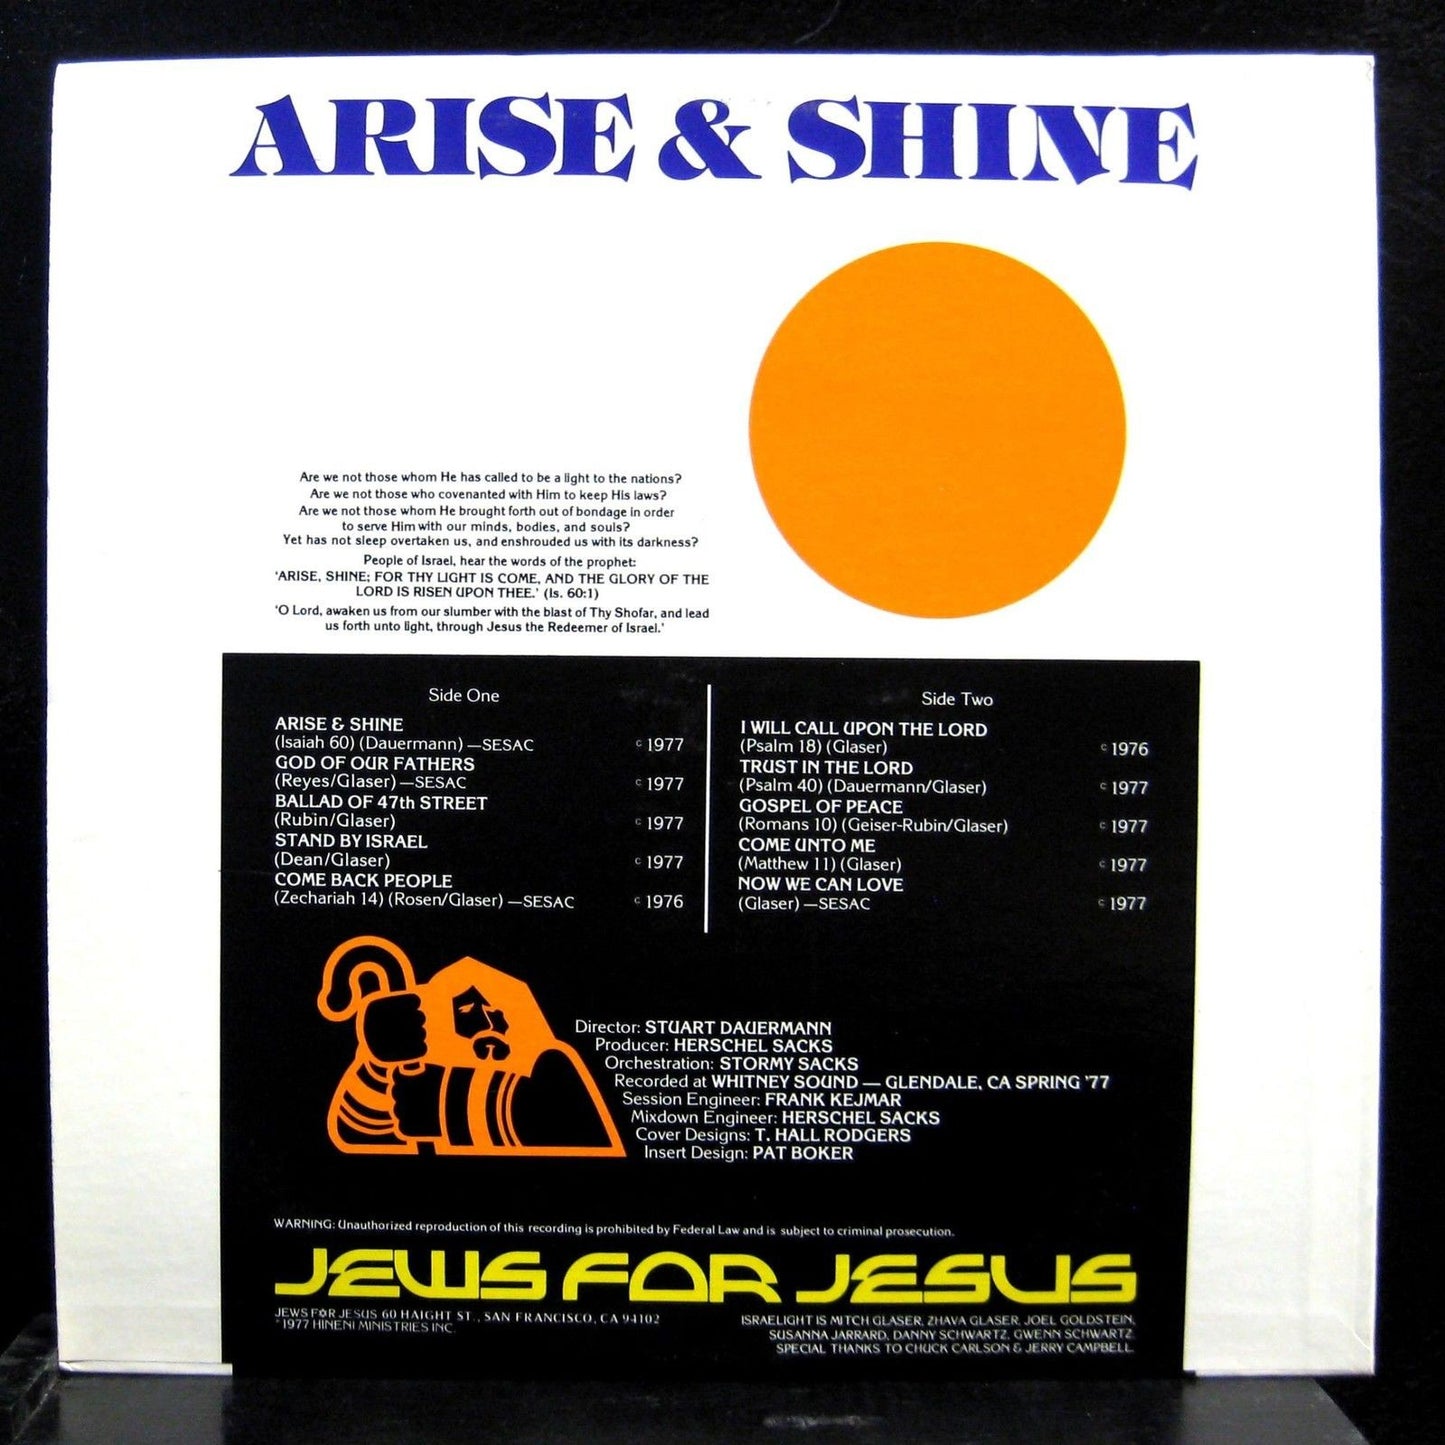 Arise & Shine - Israelight